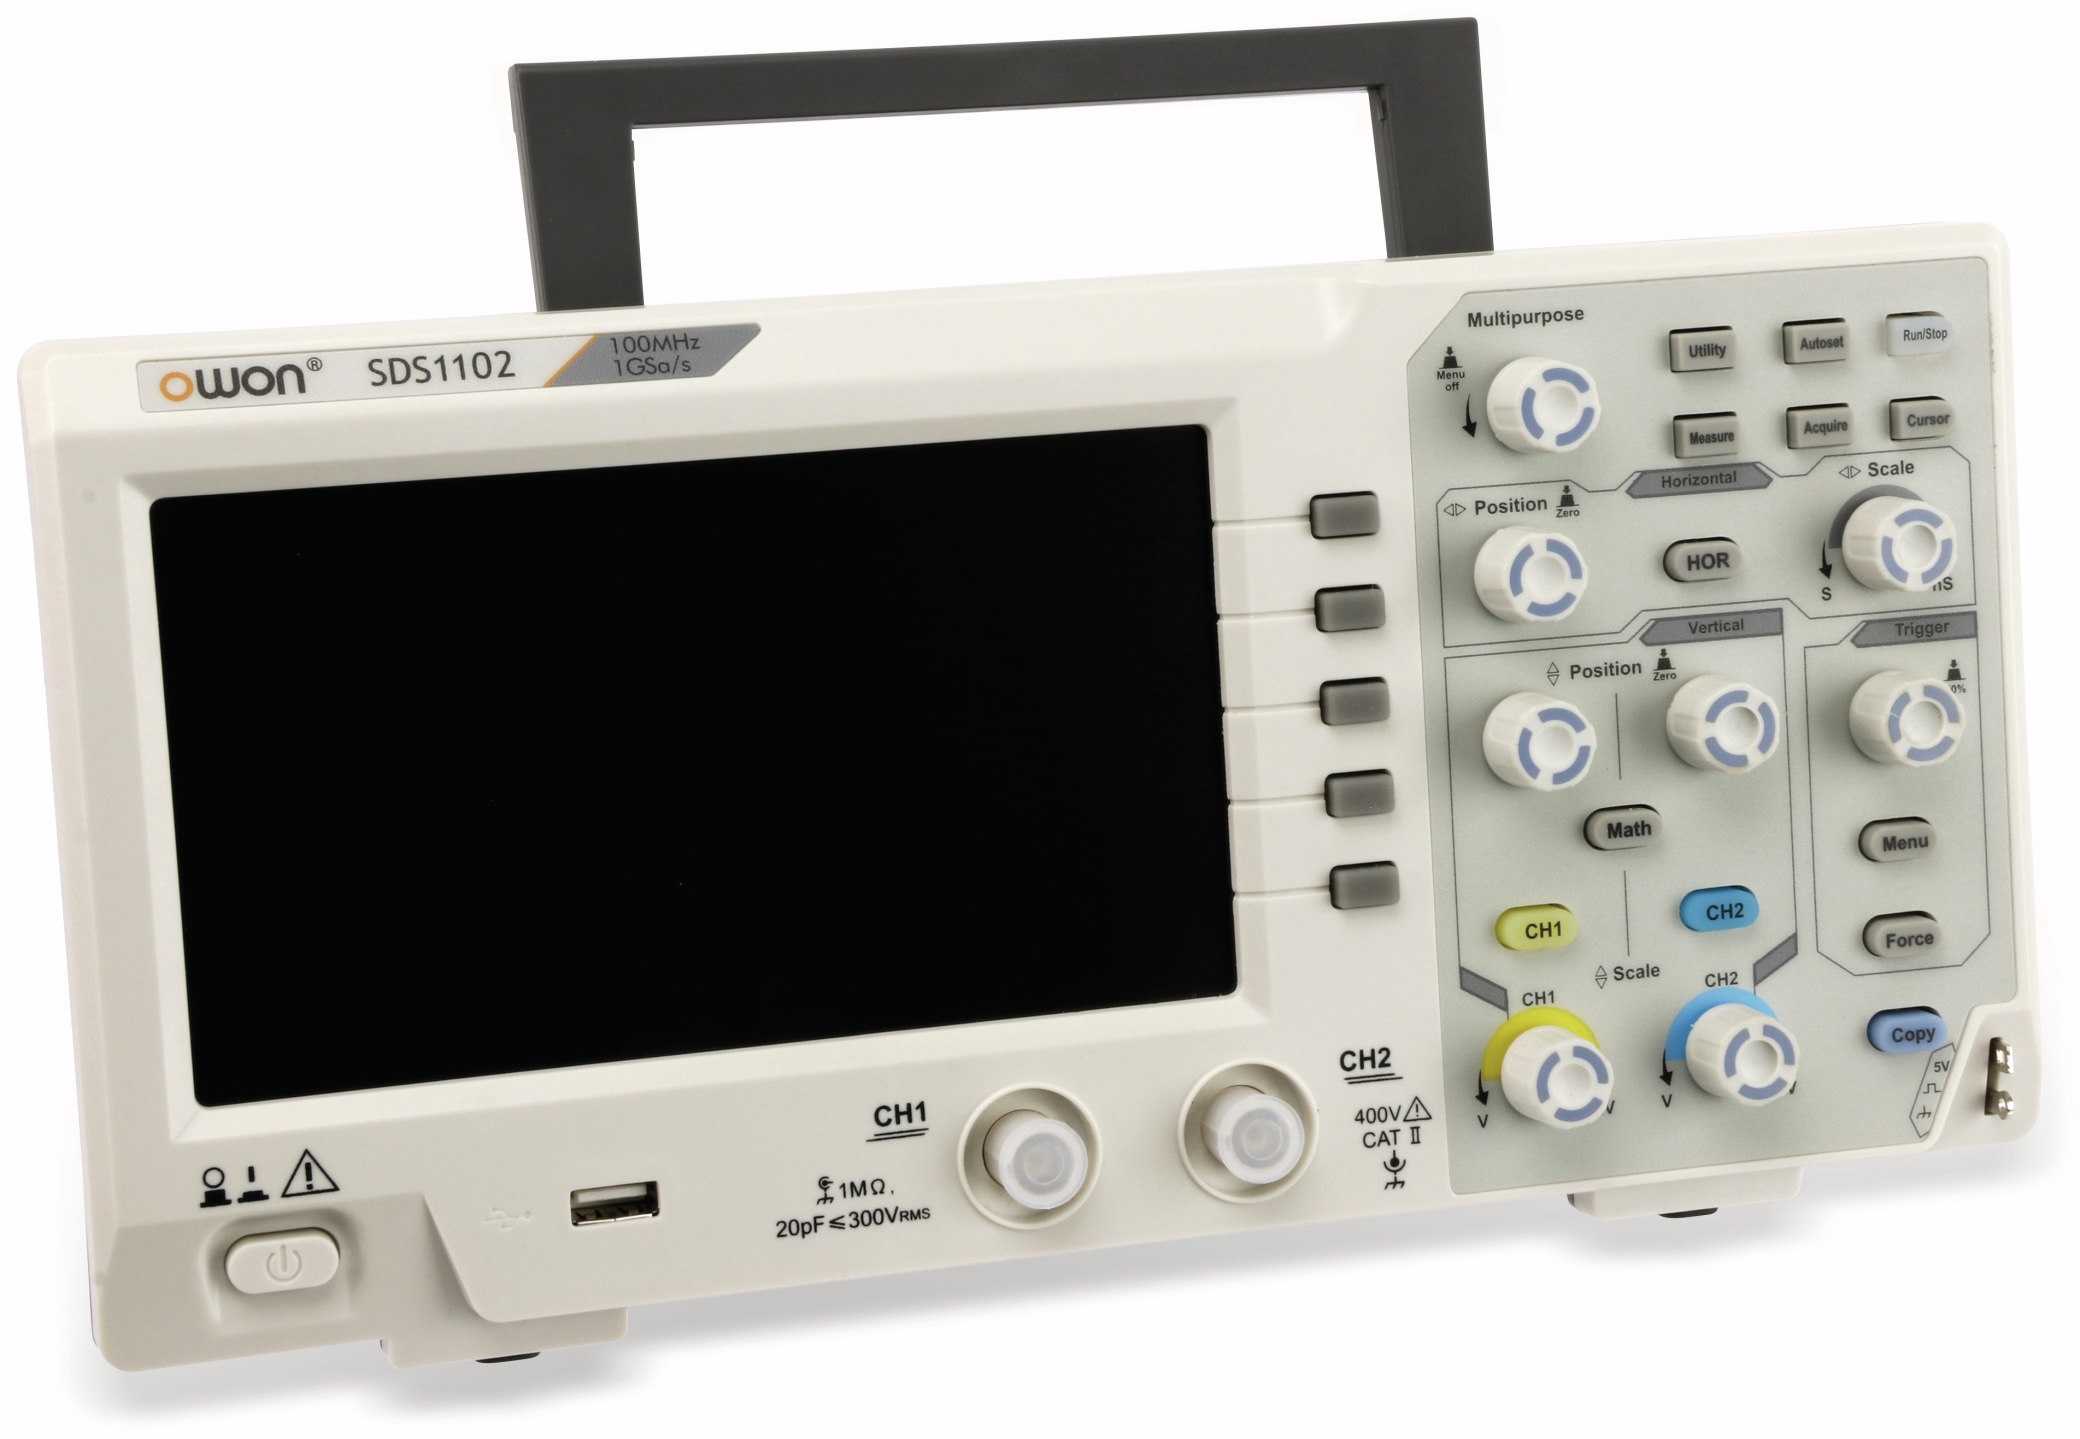 OWON LCD Speicher-Oszilloskop SDS1102, 2-Kanal, 100 MHz, USB